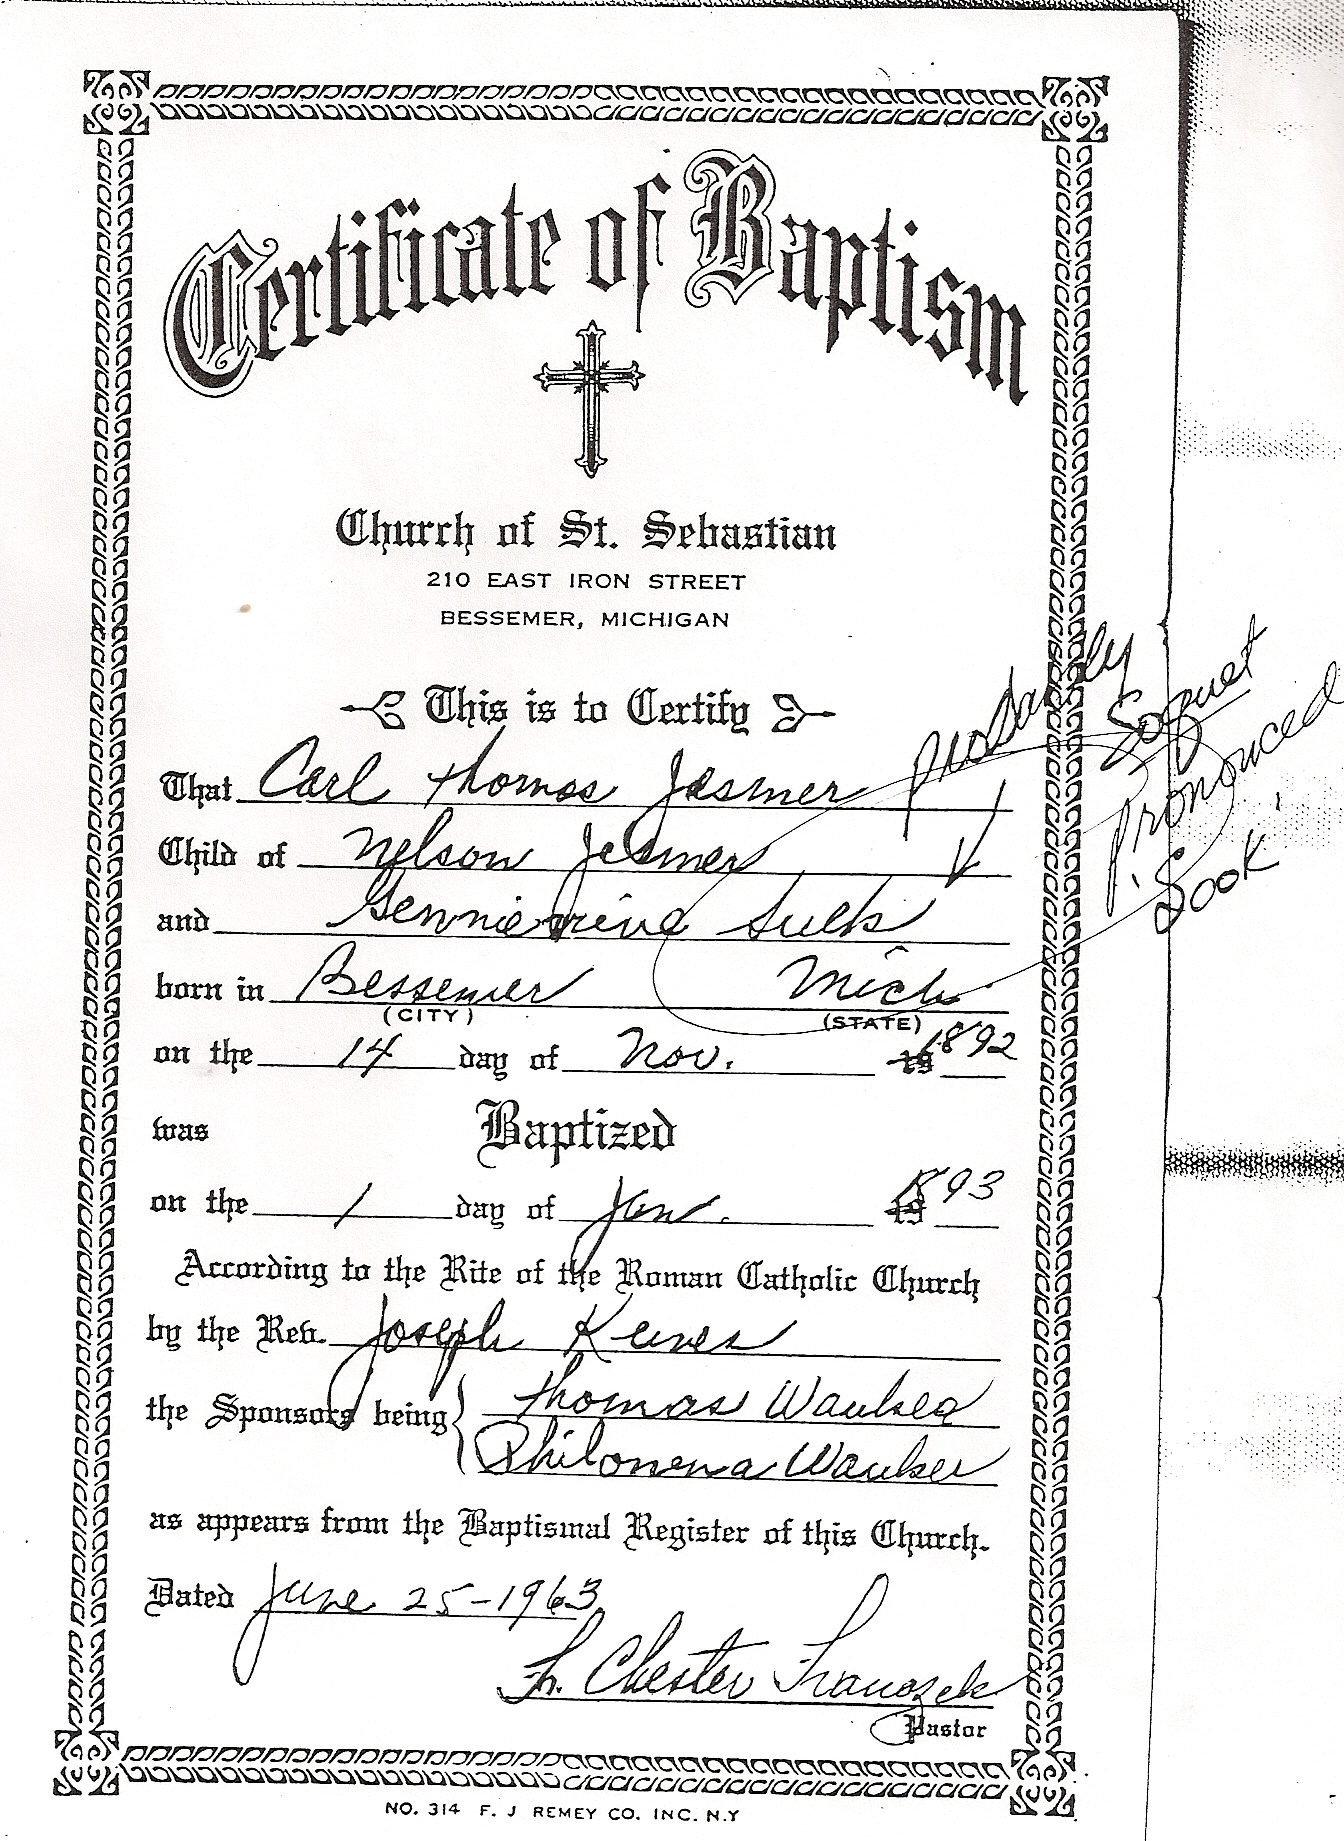 2-Carls birth certificate